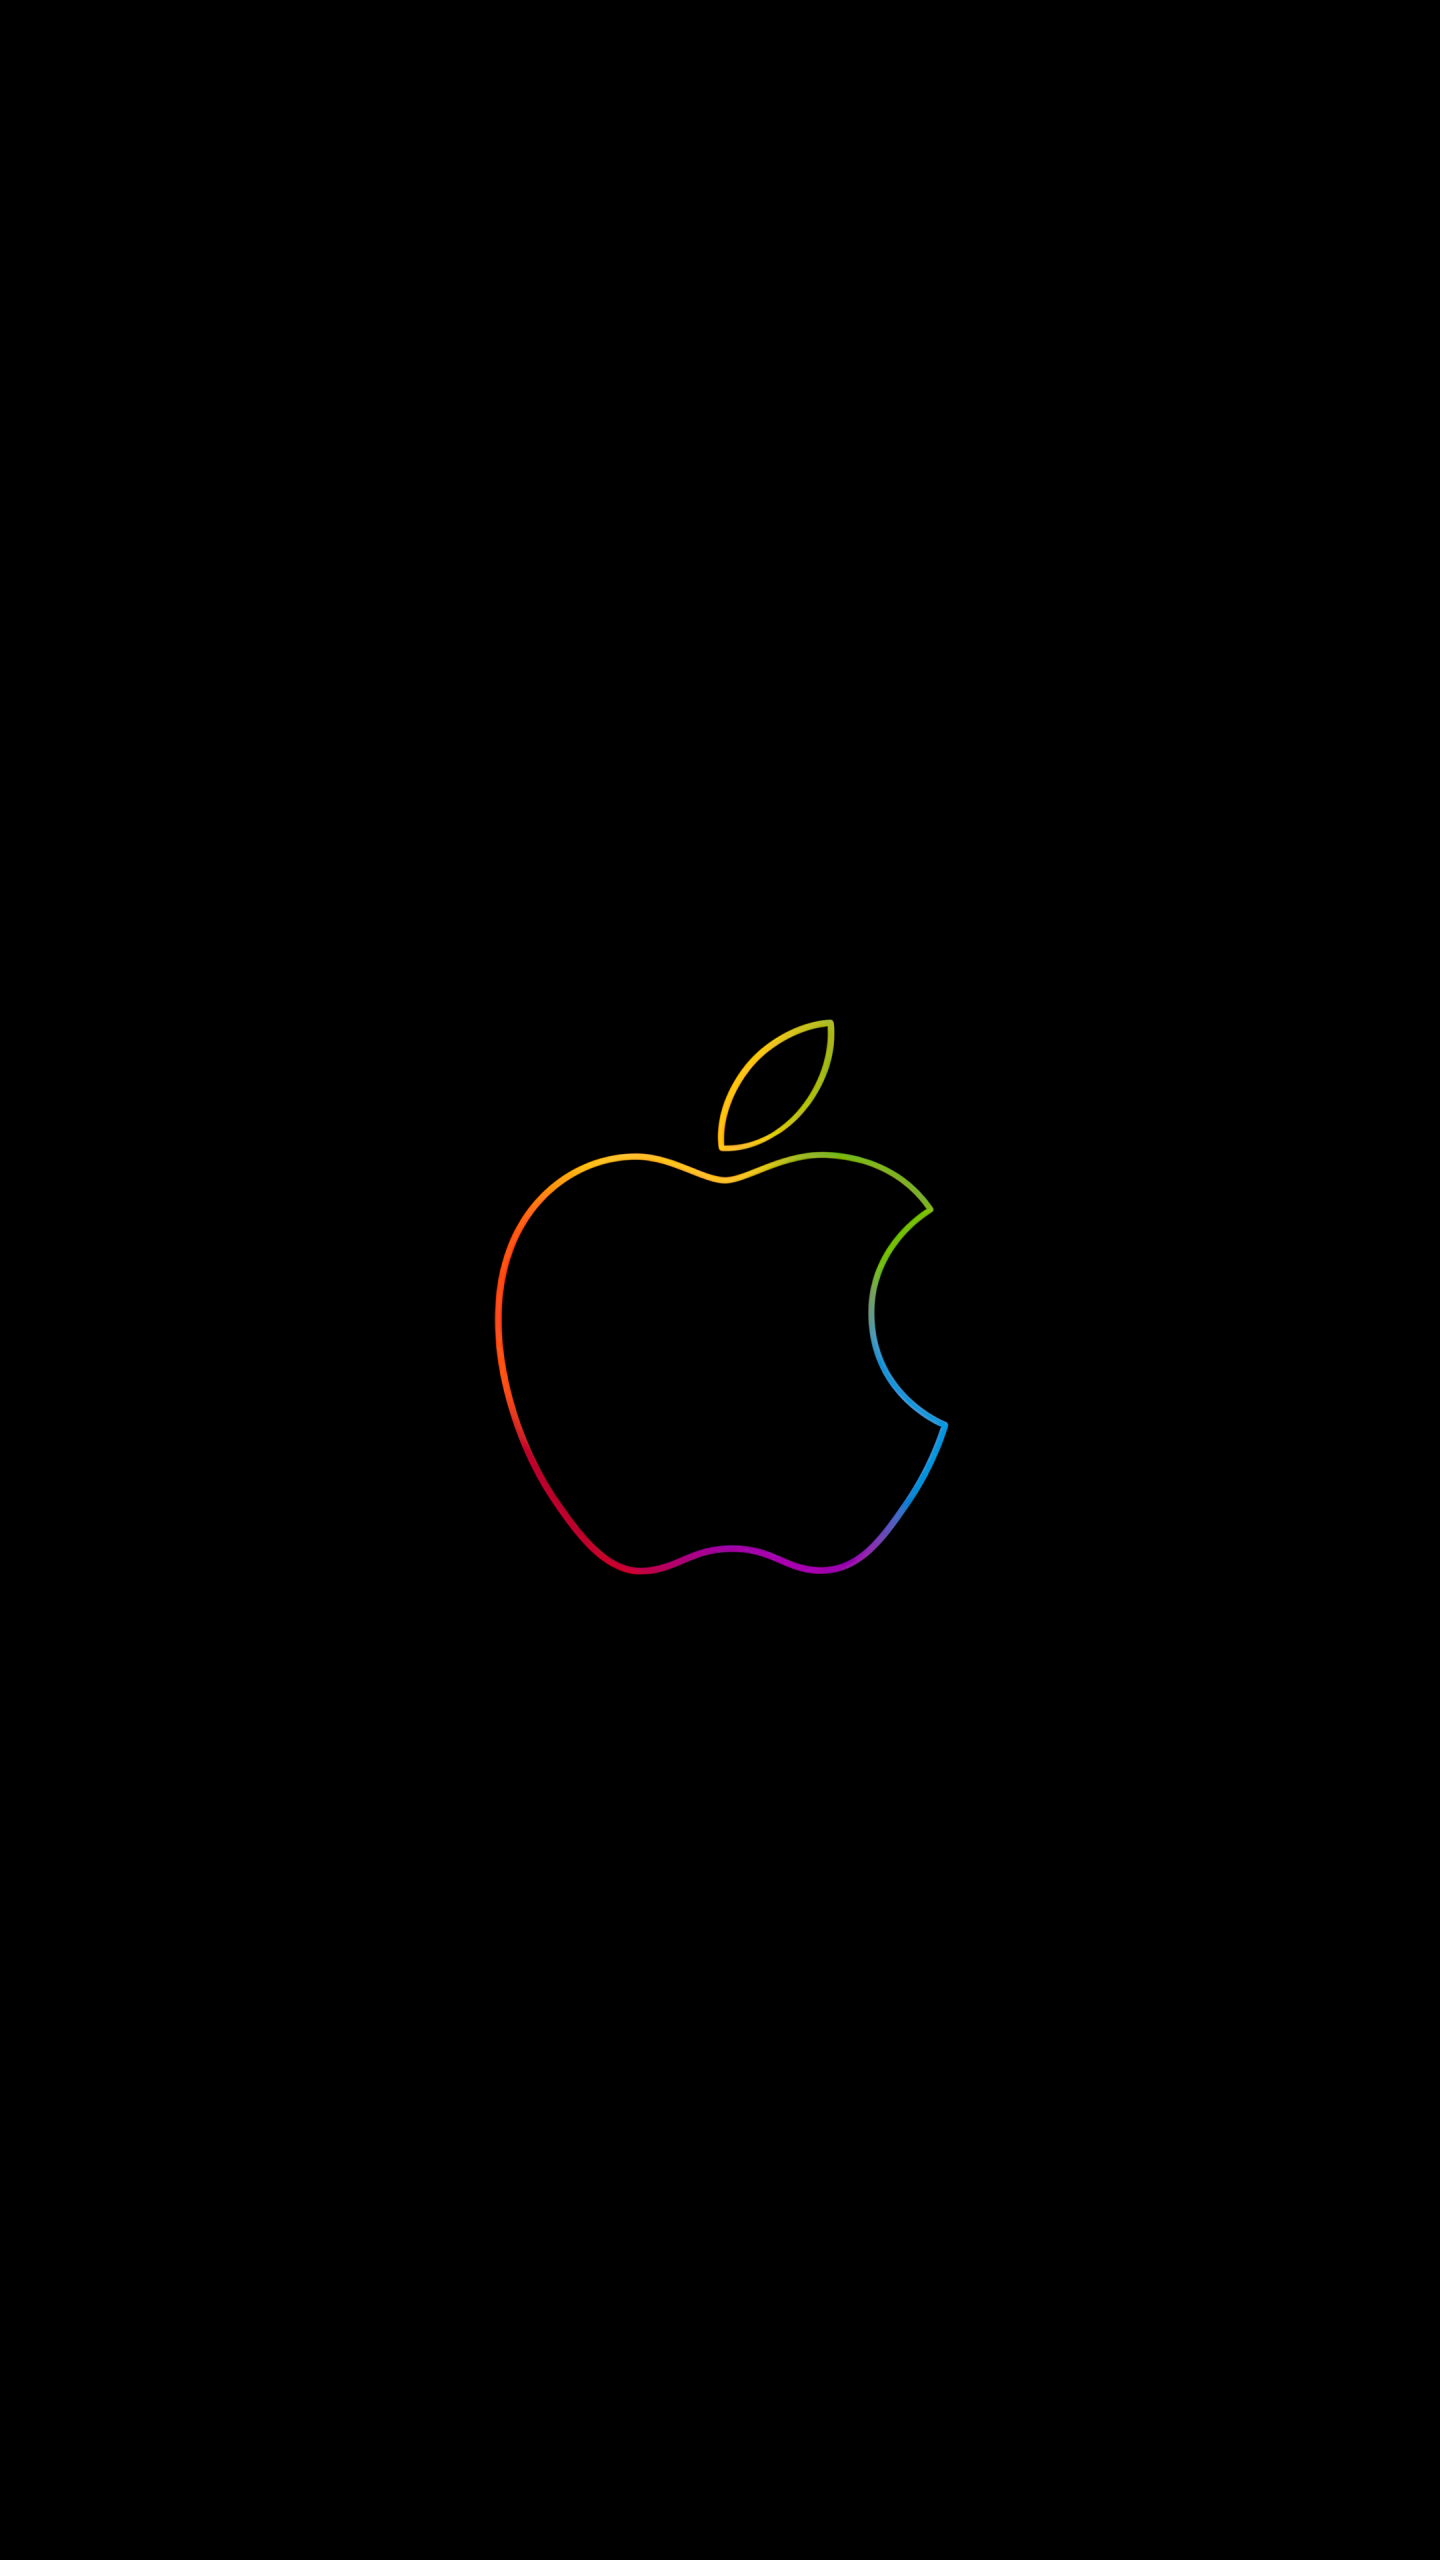 Apple Event 2022 Wallpaper 4K, iPhone 14, Apple logo